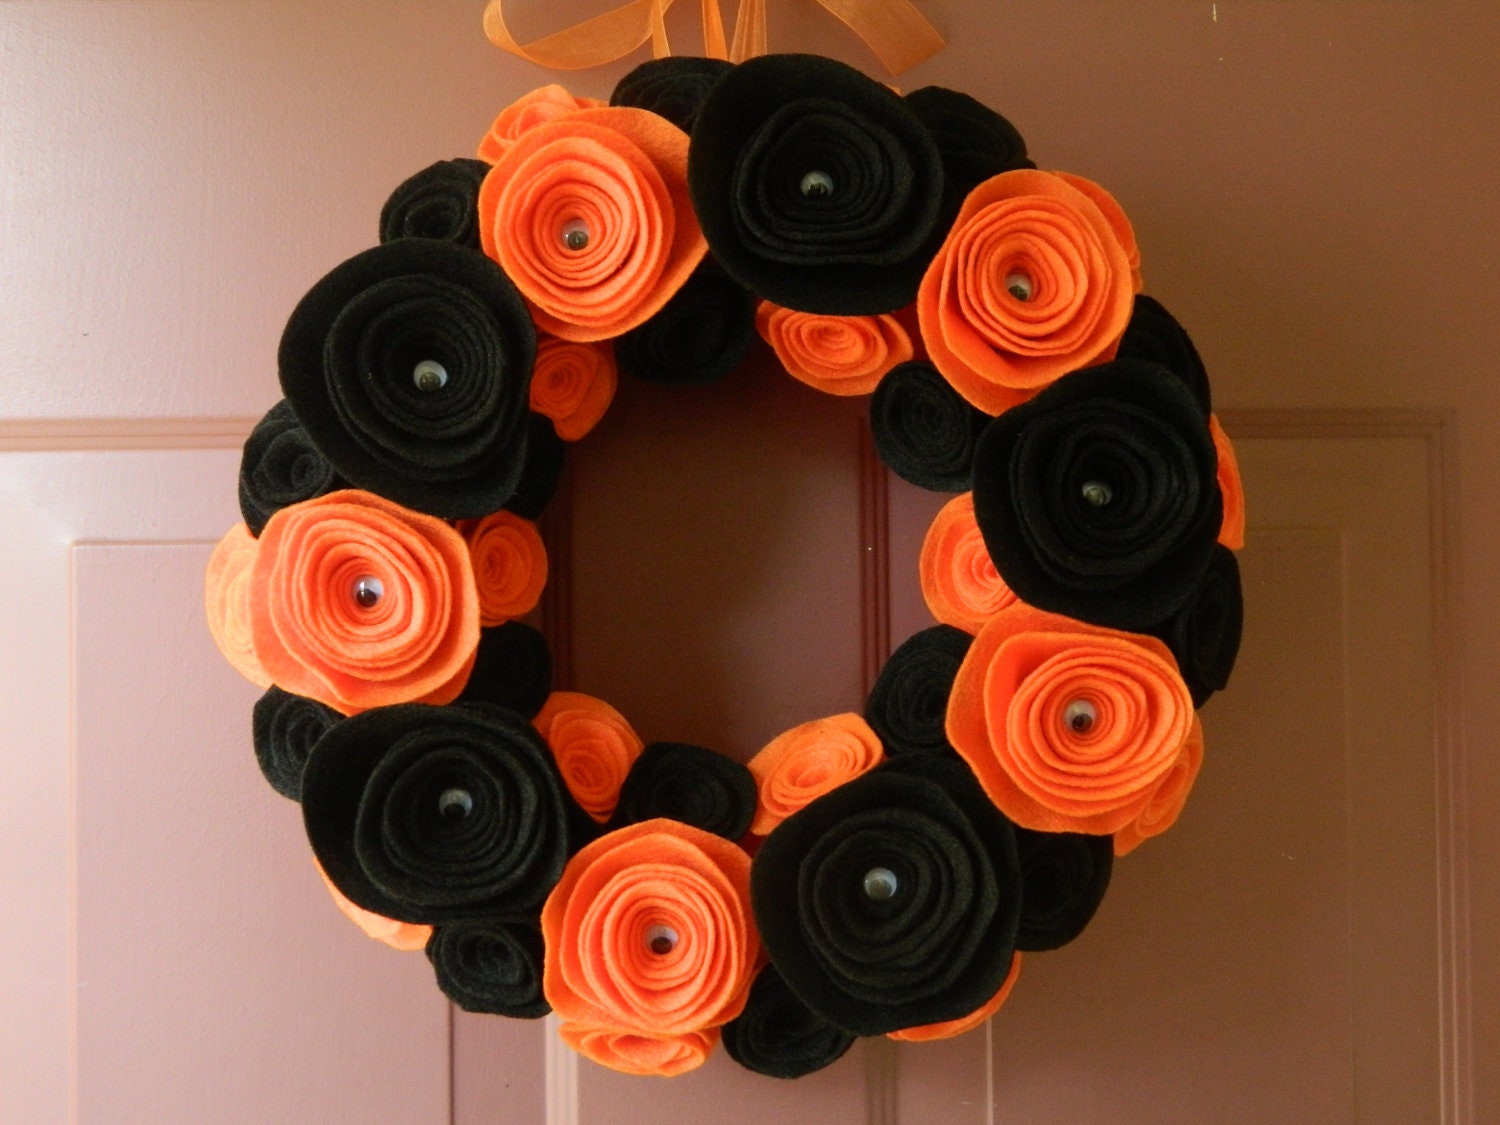 Halloween Wreath - Black and Orange Felt Flower Wreath with Google Eye Centers on the Large Flowers - 12 inch